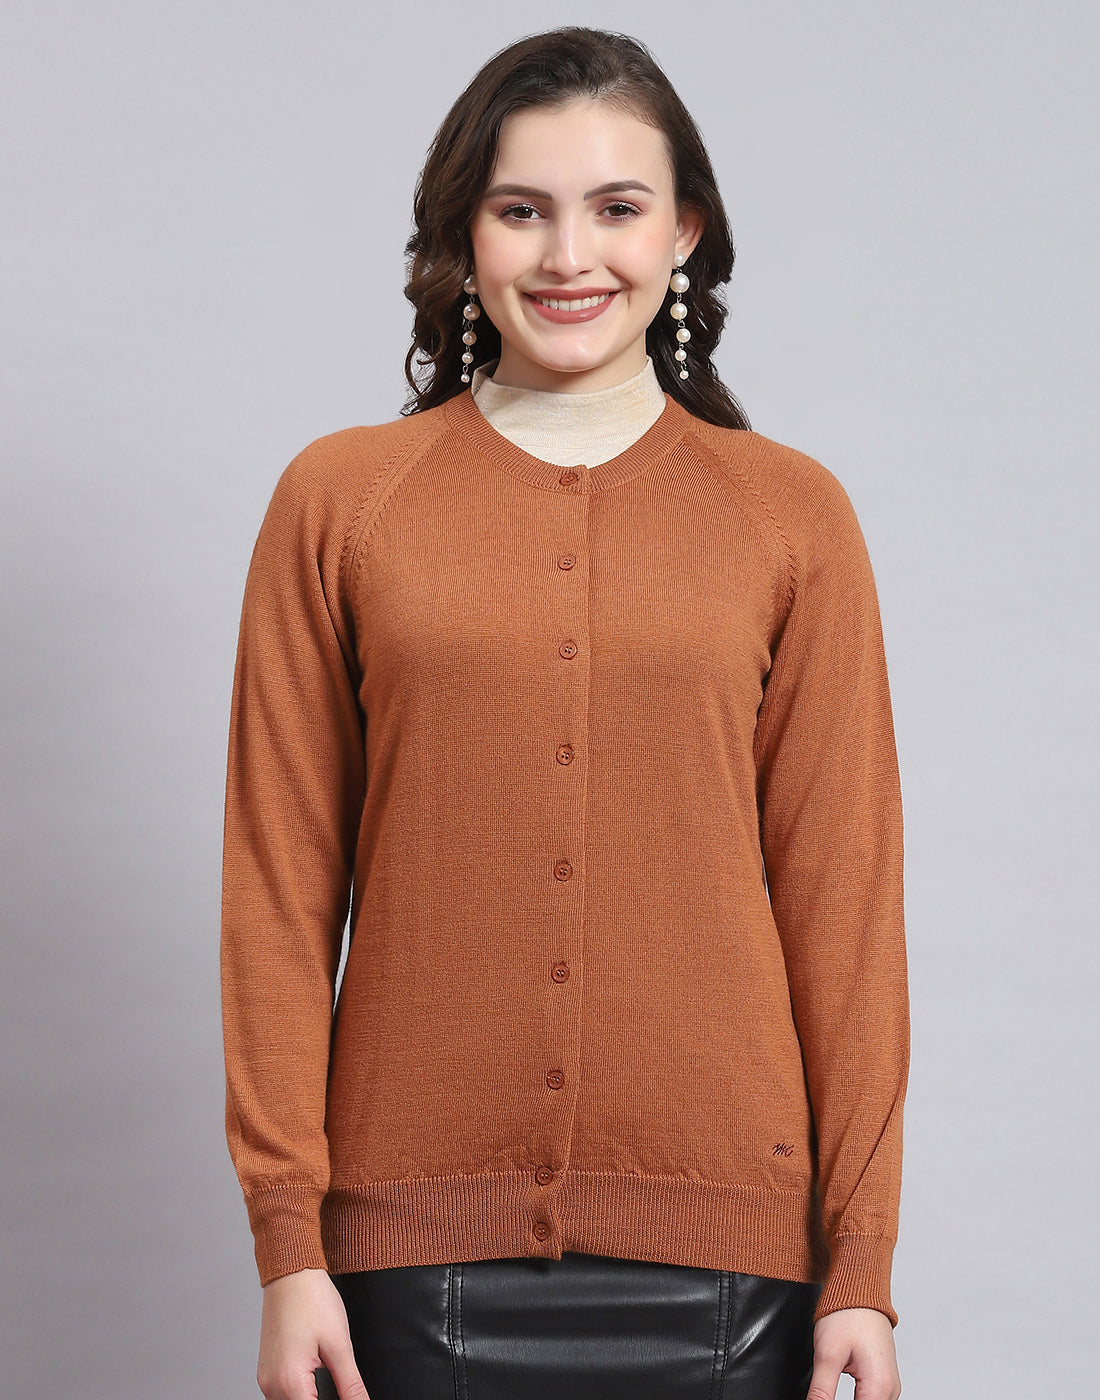 Round Neck Full Sleeves Ladies Woolen Sweater at Rs 1450/piece in Kolkata